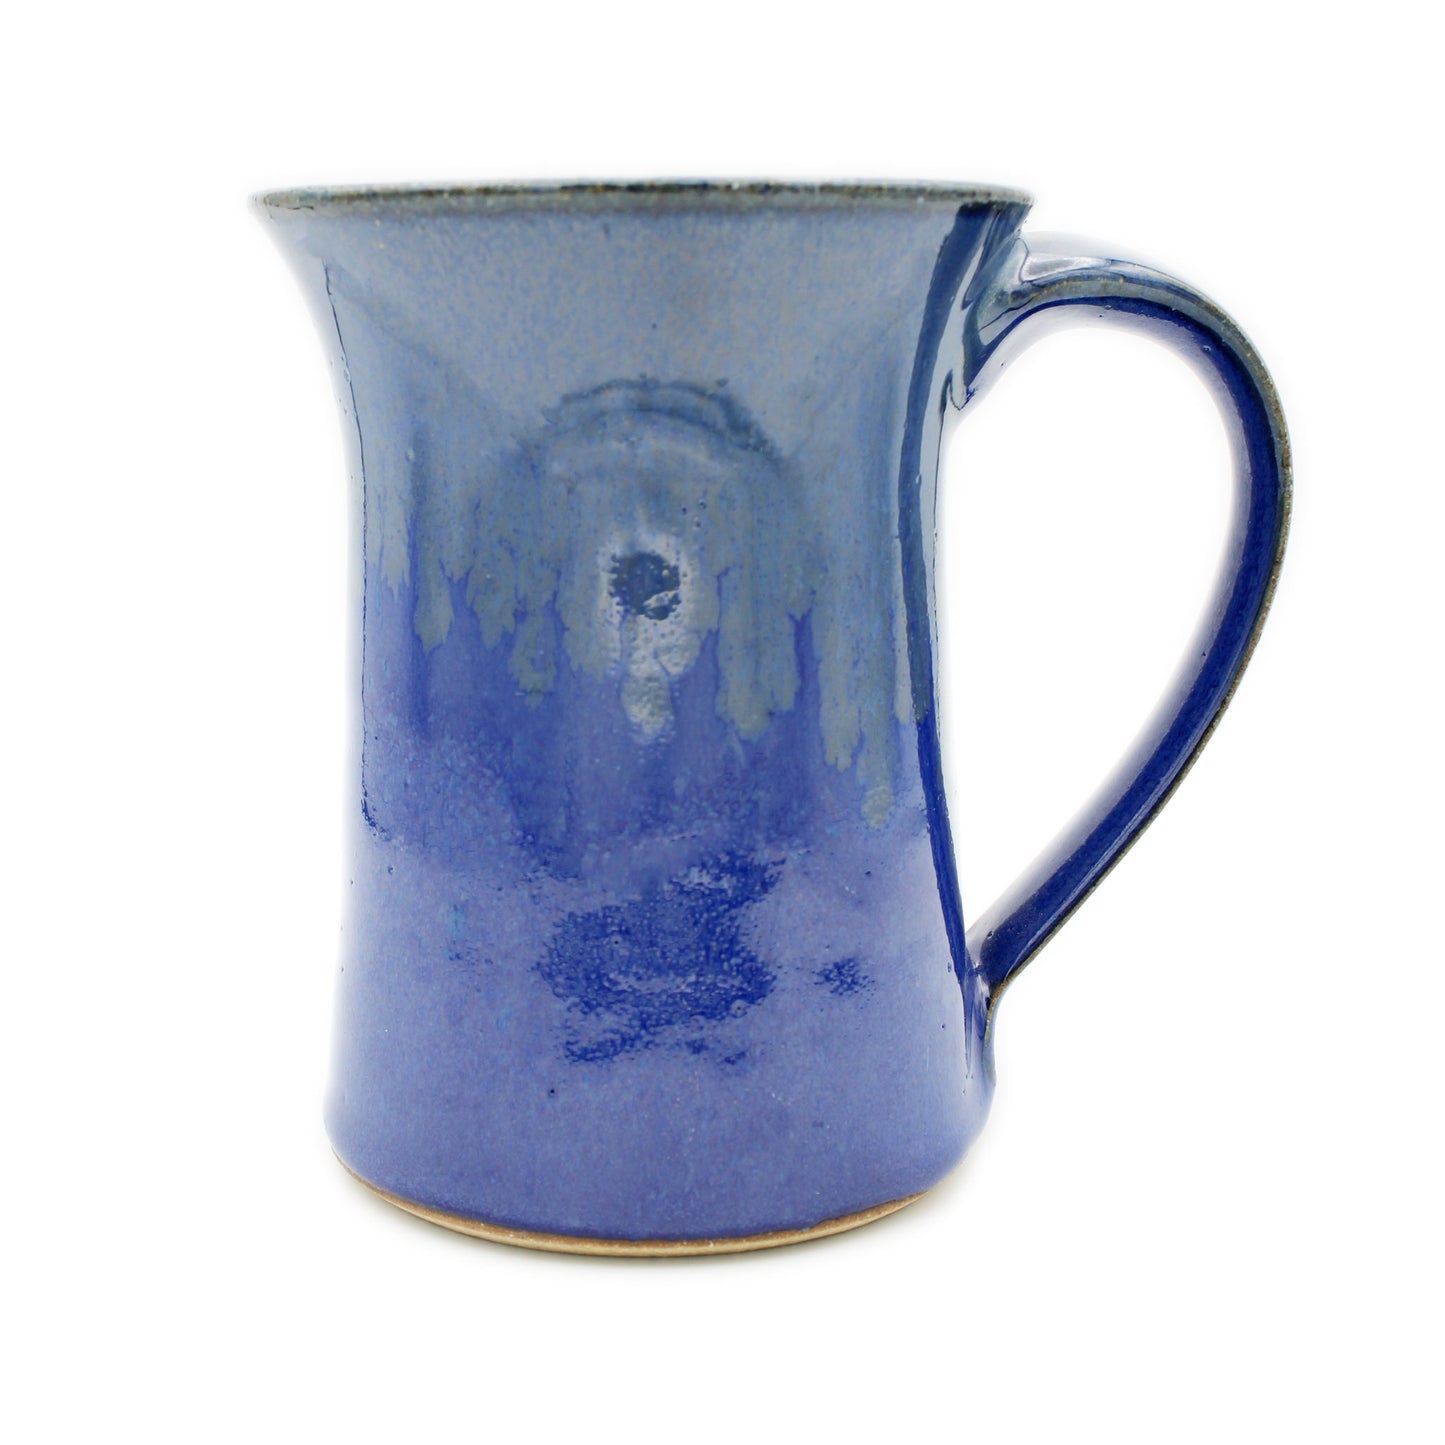 Hand-thrown Mug with Blue Glaze